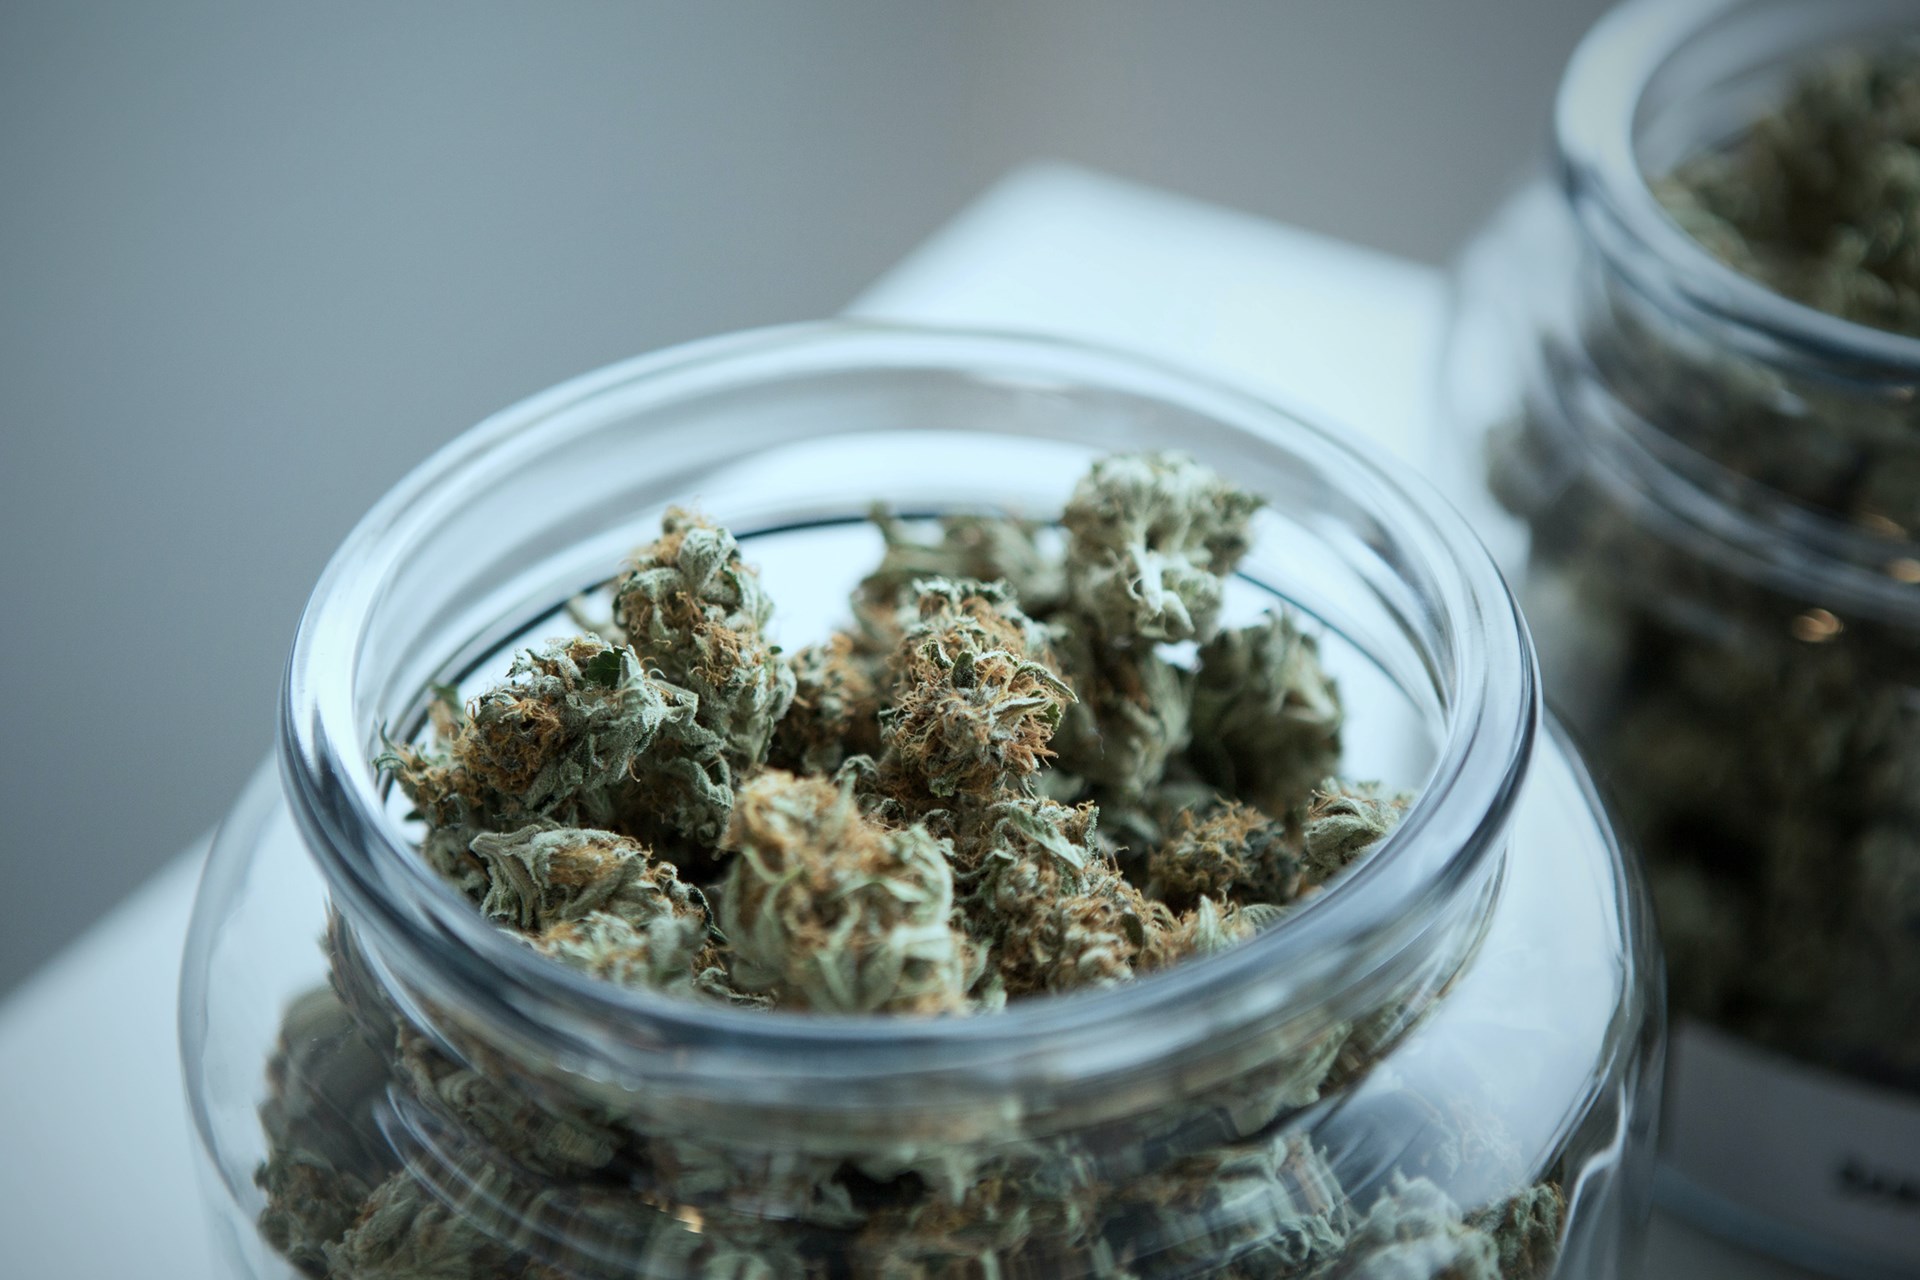 Mason jar filled with cannabis flower